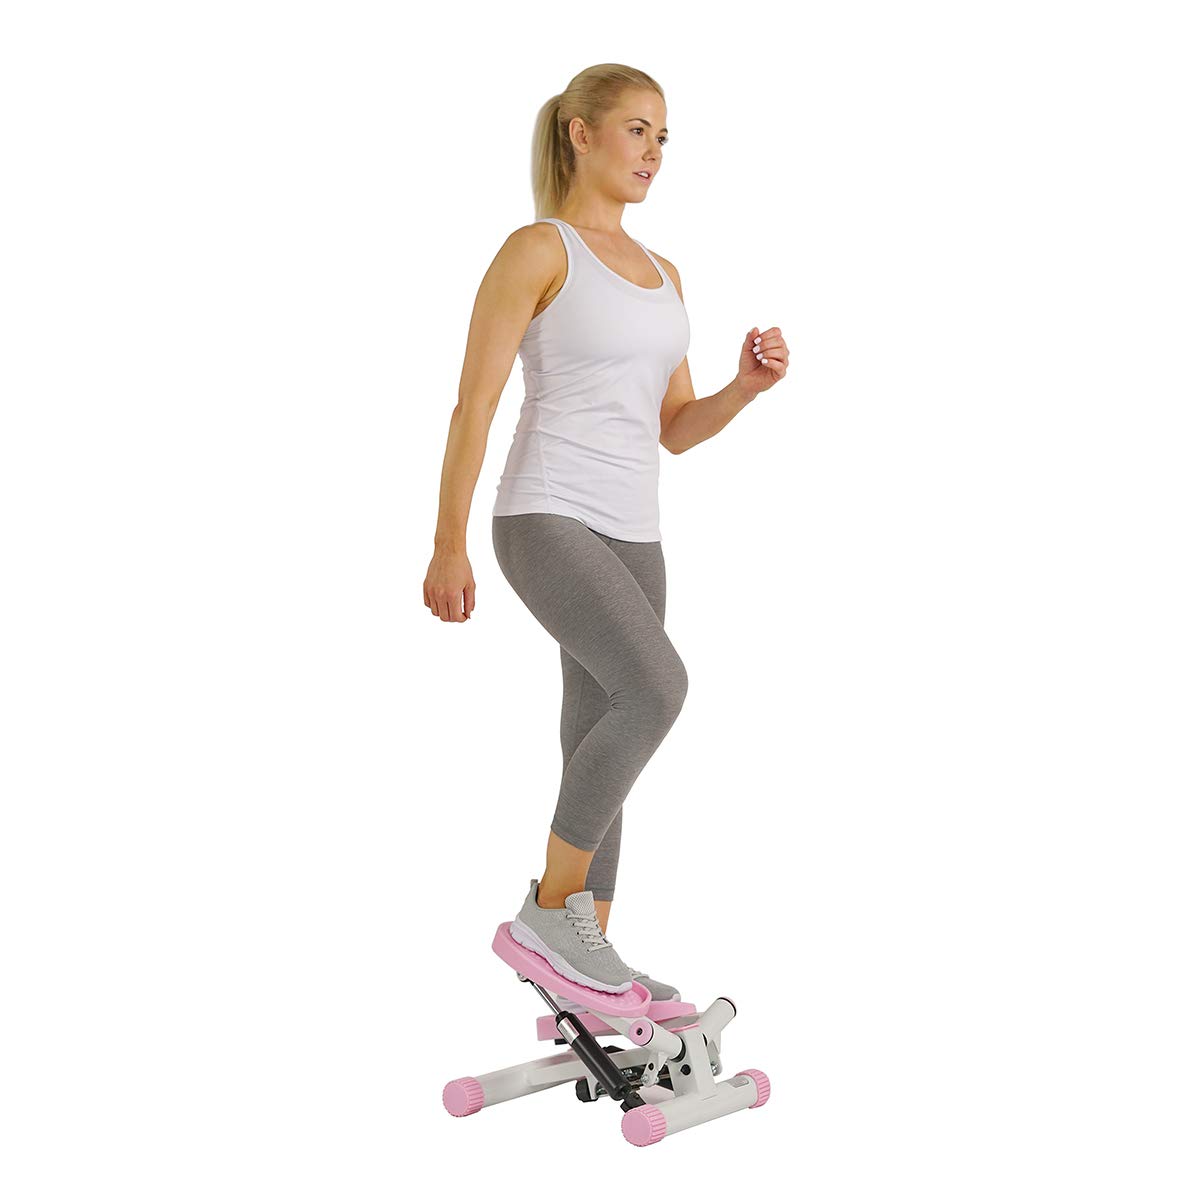 Sunny Health & Fitness 运动踏步机，便携式迷你楼梯踏步机，适合家庭、办公桌或办公室锻炼，粉色